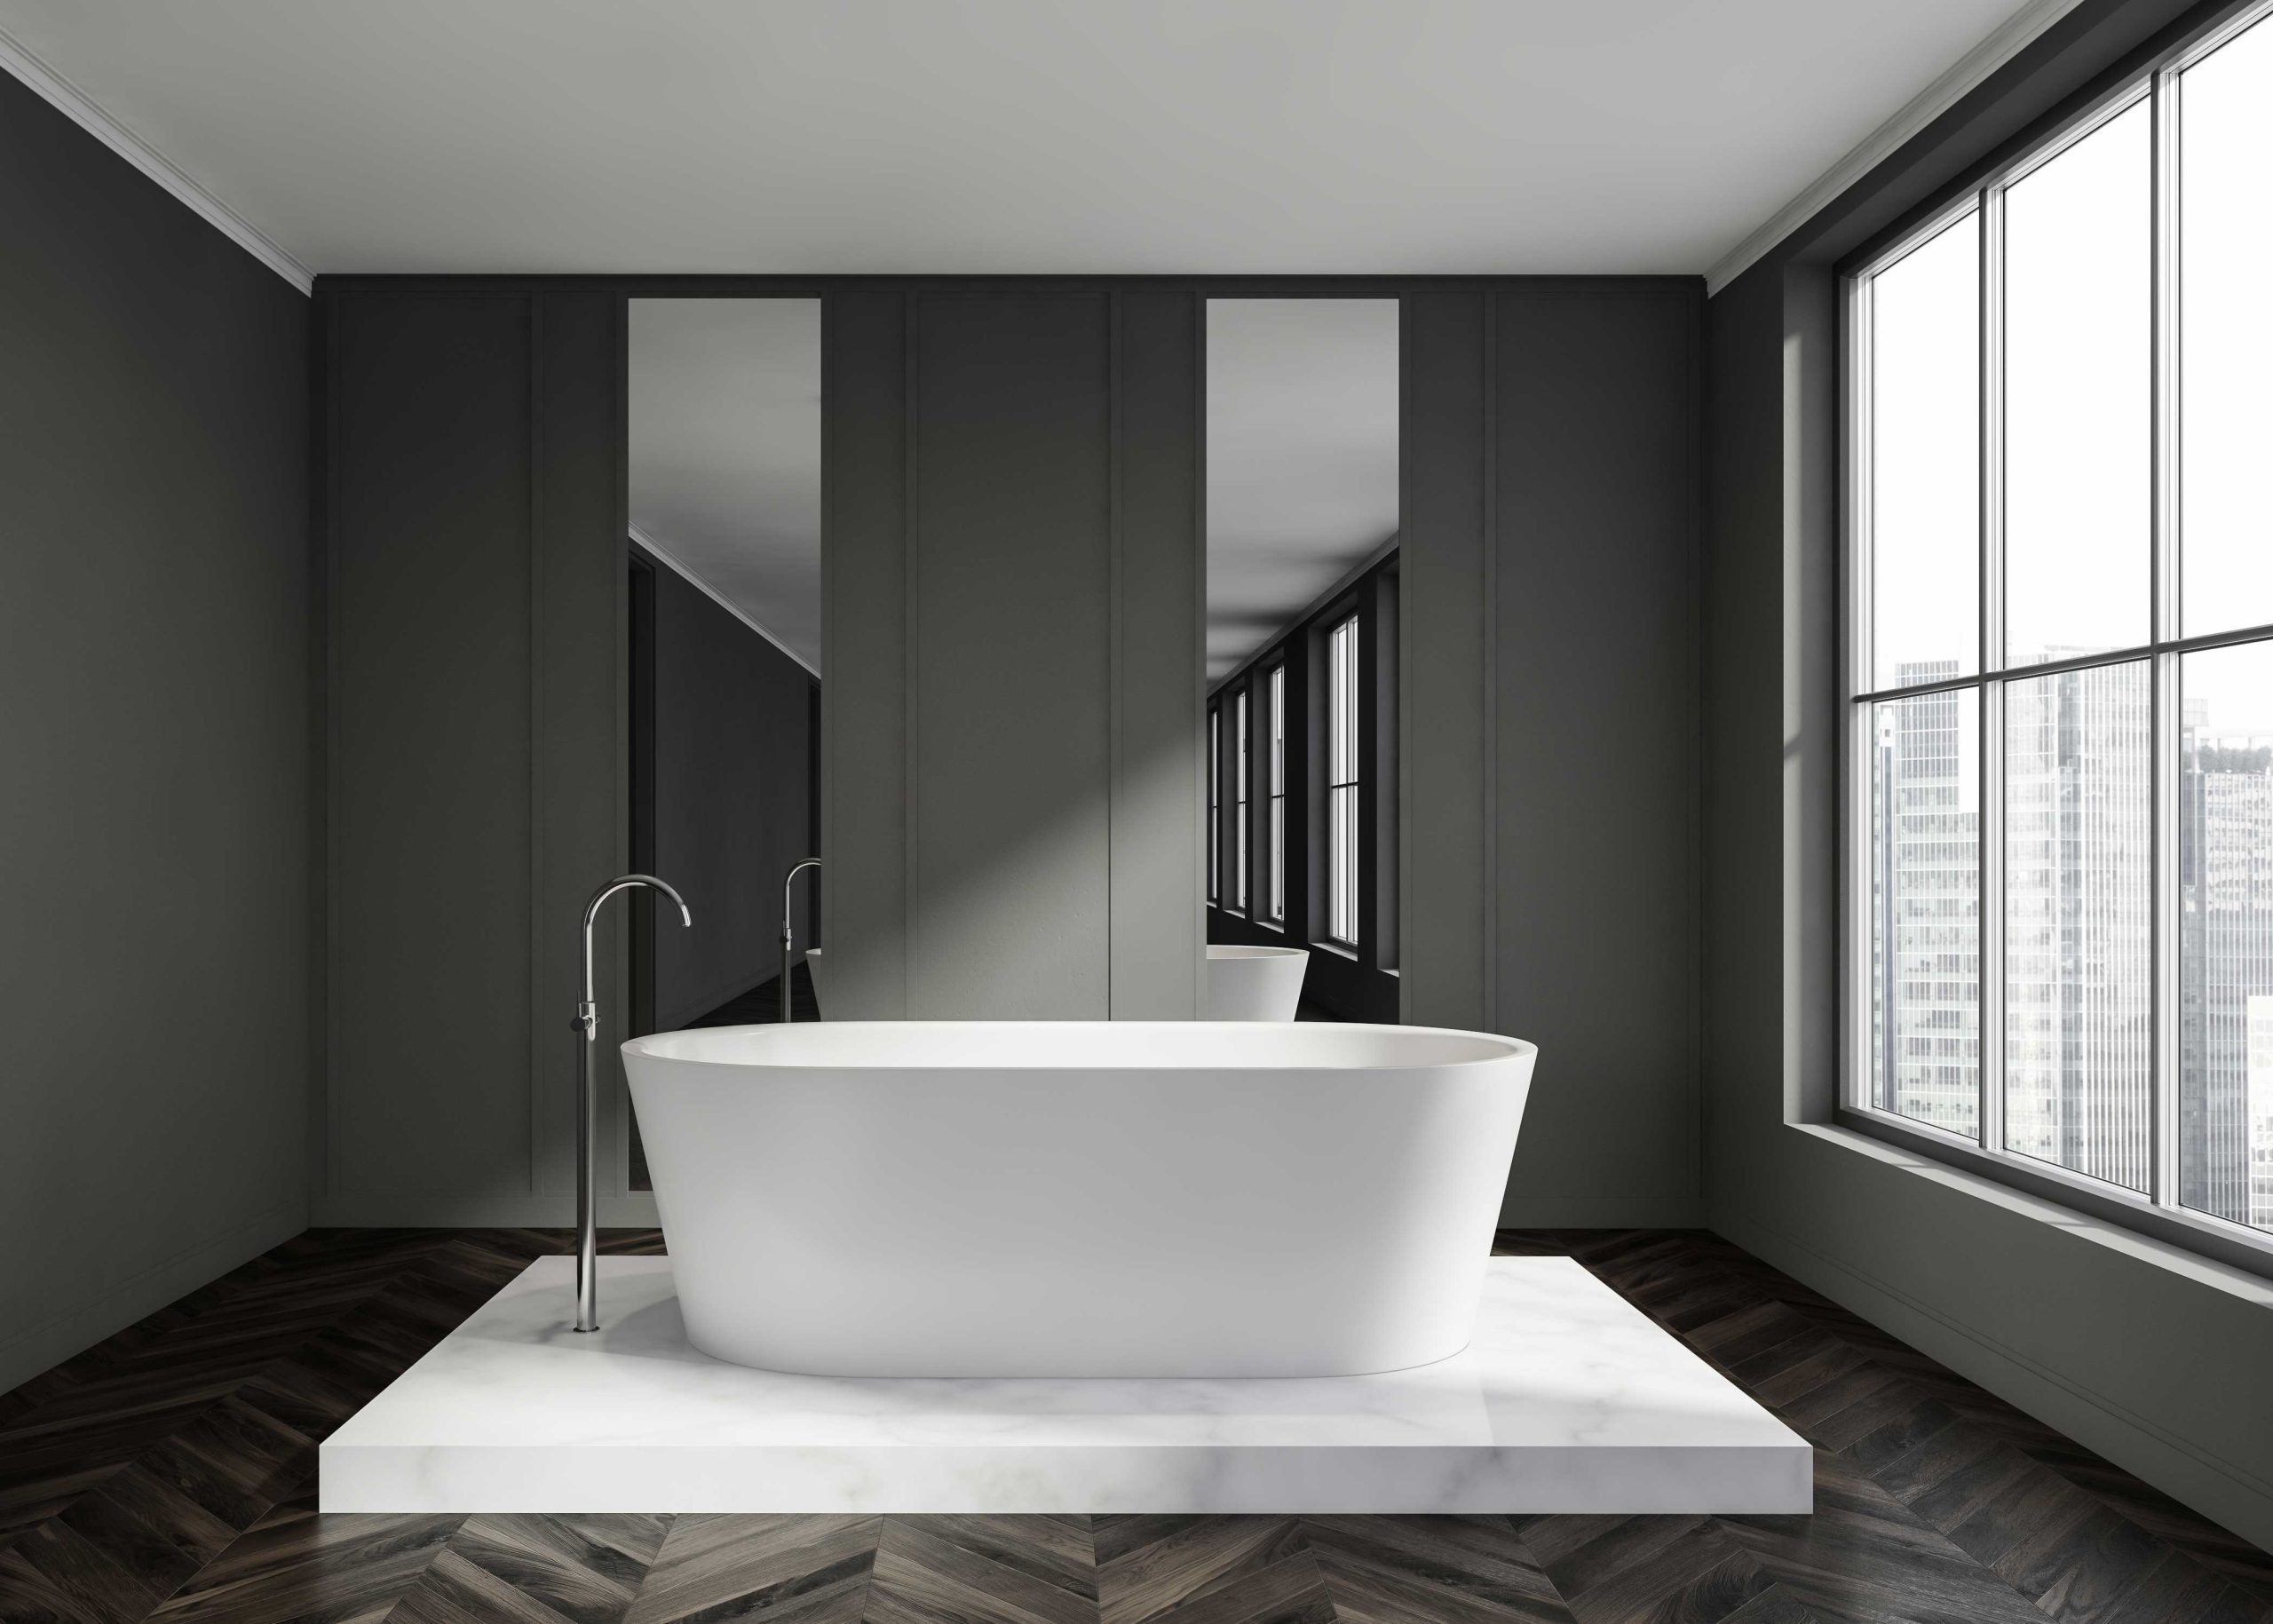 Stand alone bathtubs create spa-like retreates in bathrooms across Pueblo, CO.